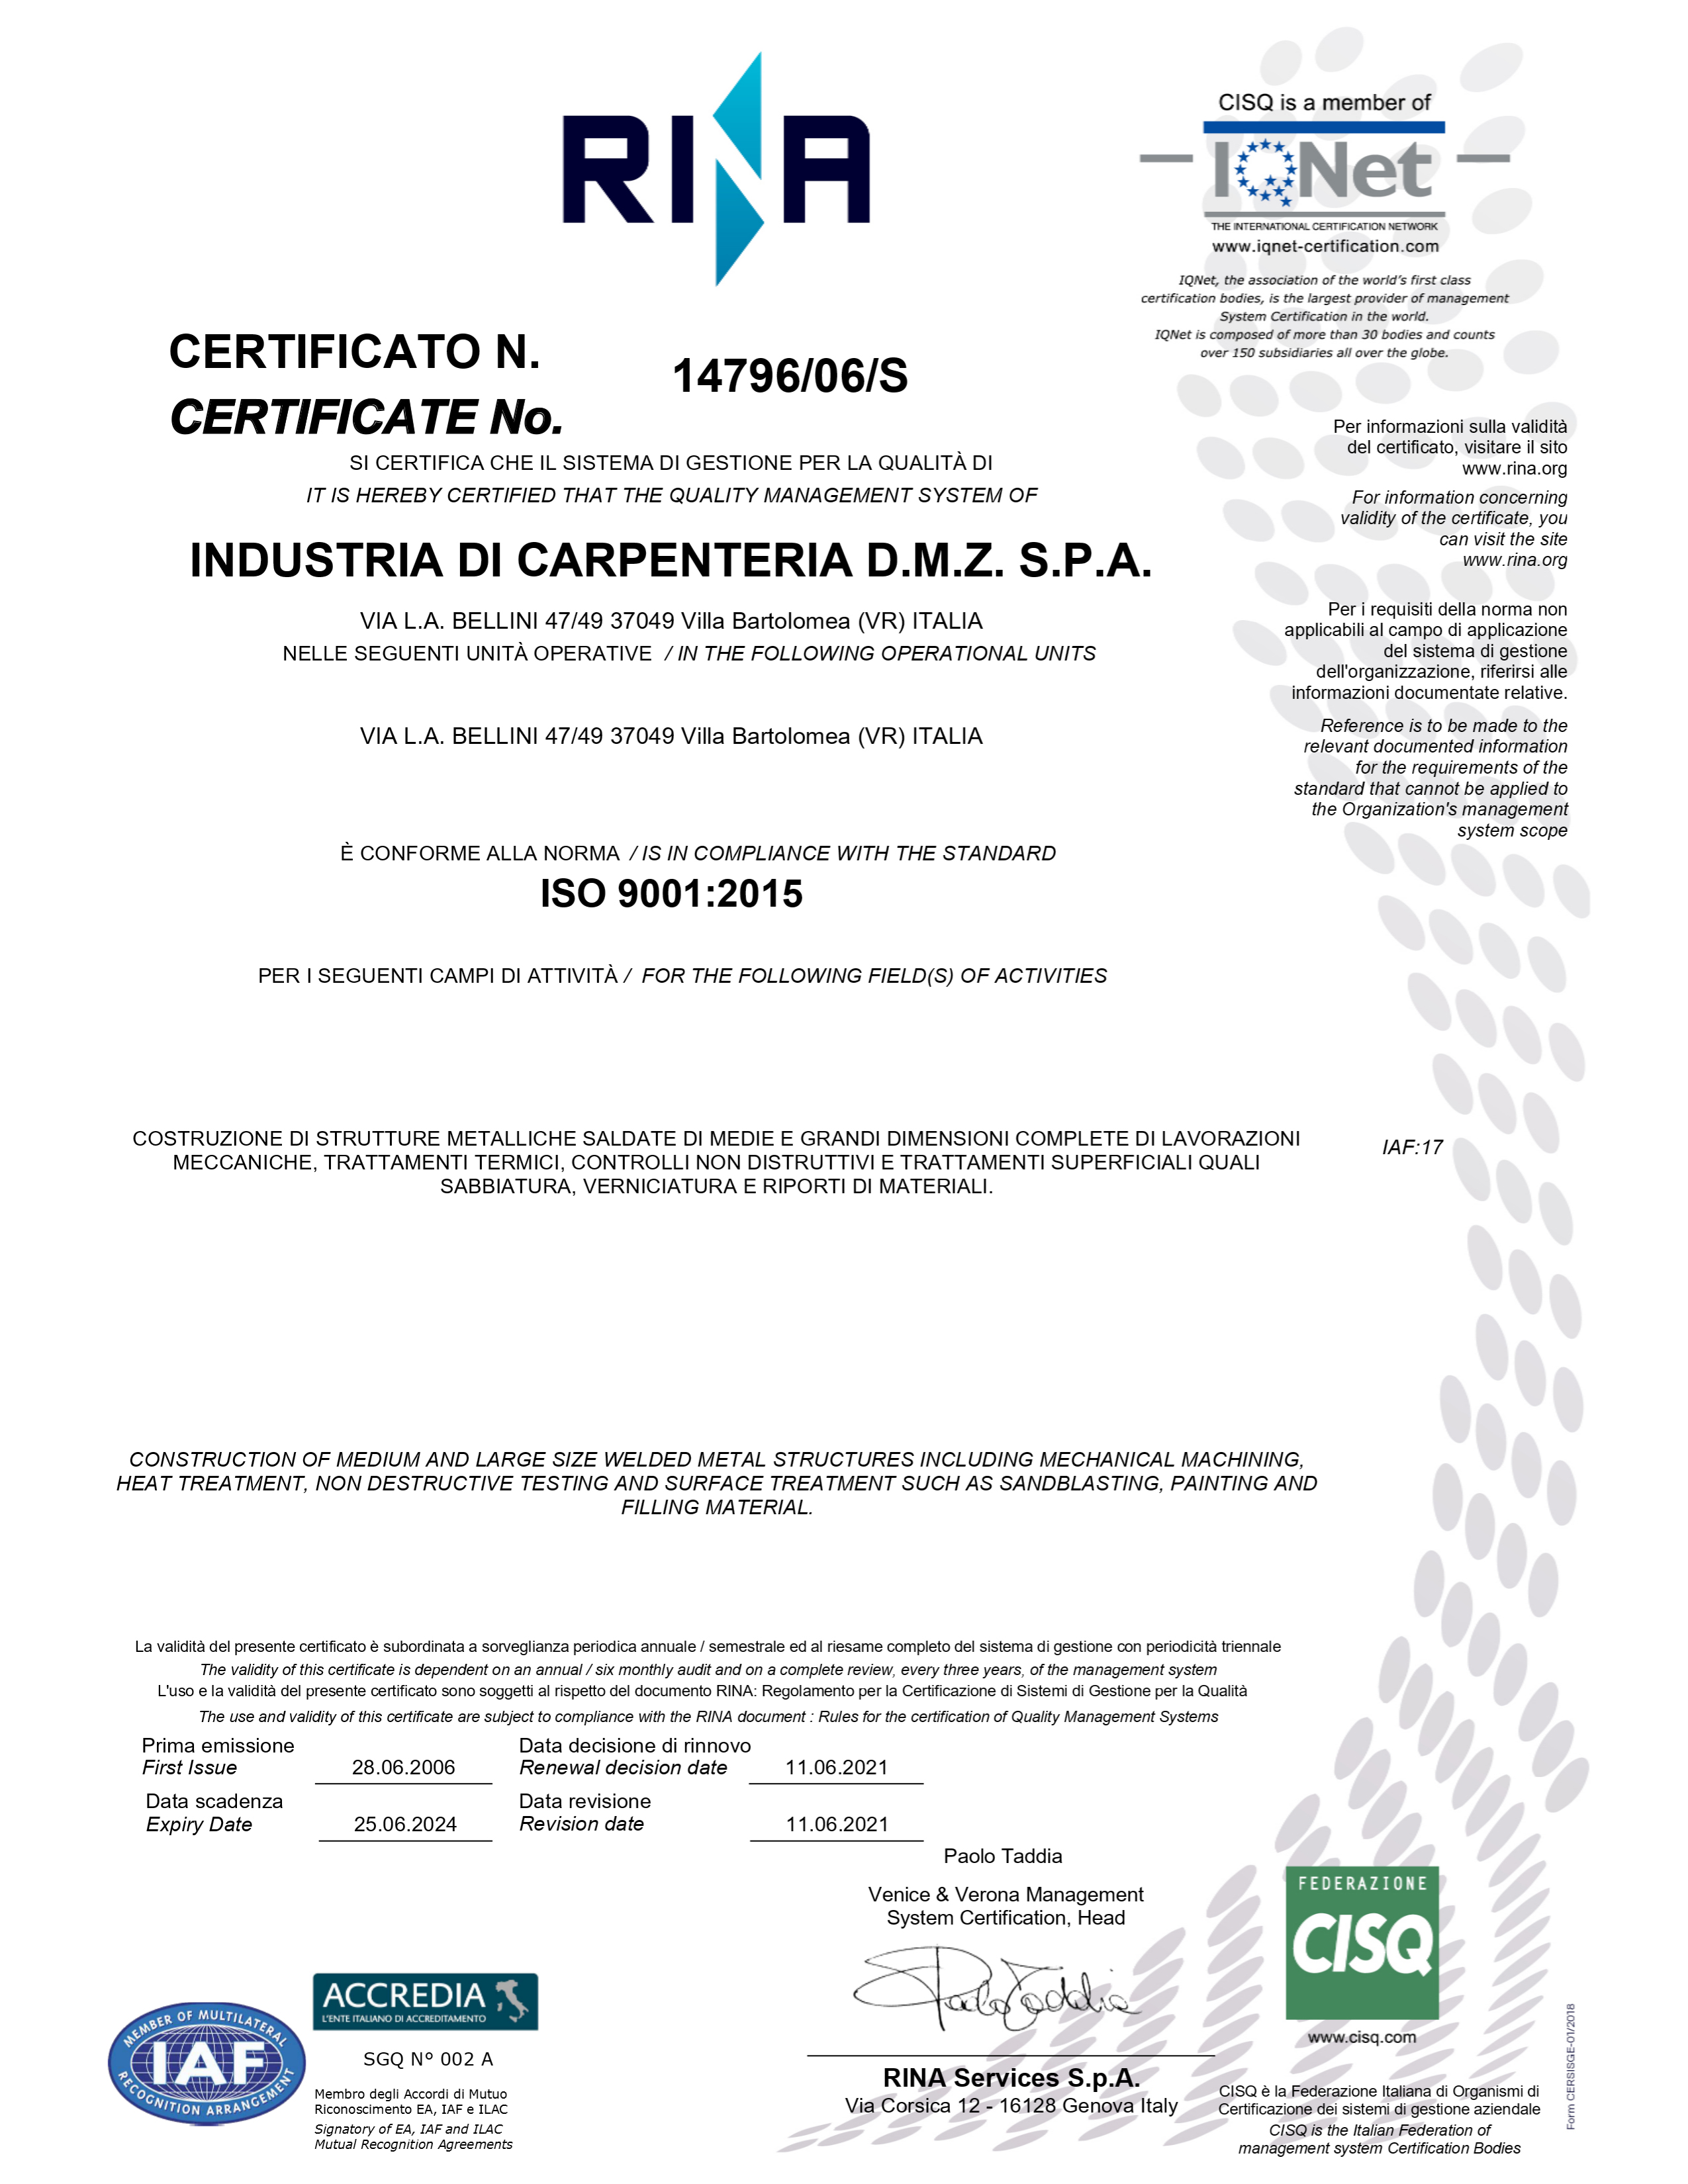 Certificazioni Rina 04 | DMZ